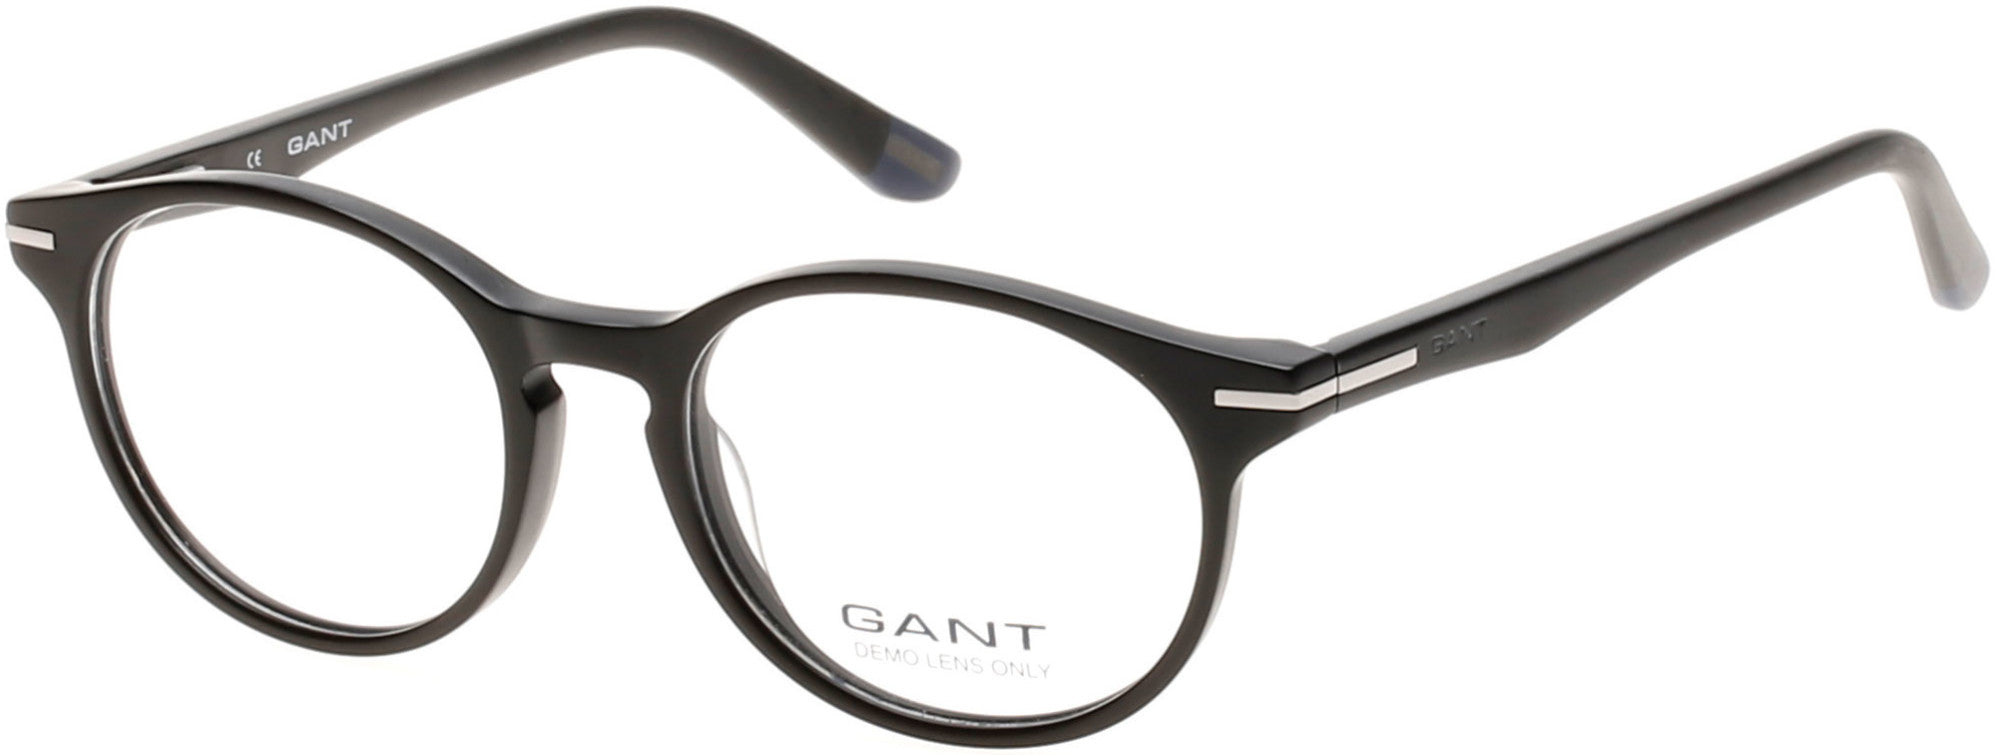 Gant GA3060 Round Eyeglasses 002-002 - Matte Black